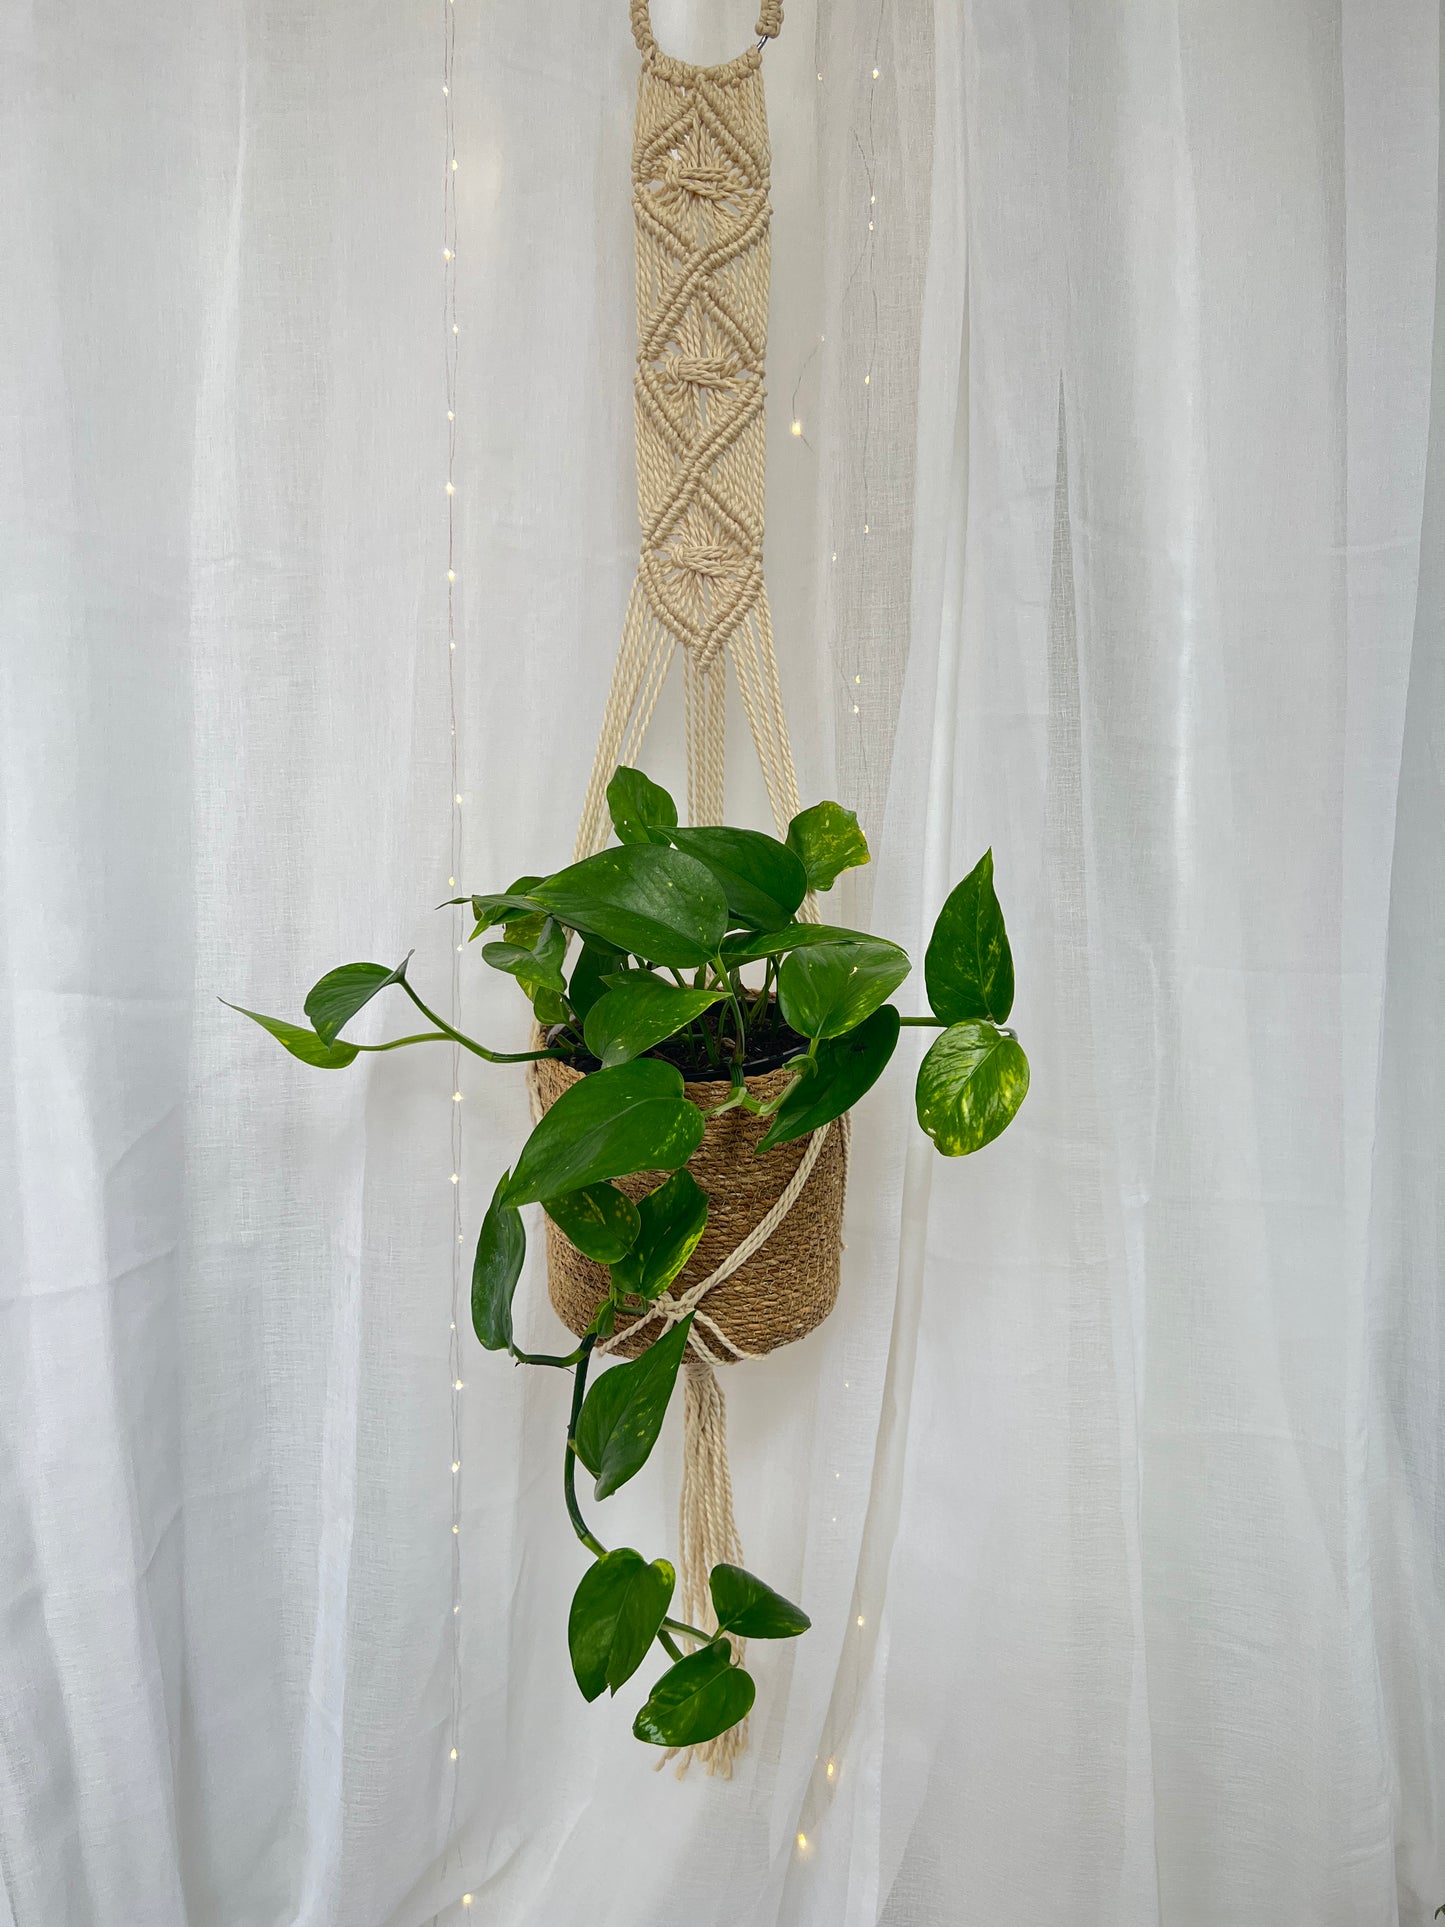 Devils Ivy Epipremnum Aureum Indoor Plant 18cm in Jute/Holga Pot and Braided Macrame 1.2m Coastal Earthy Boho Chic Decor